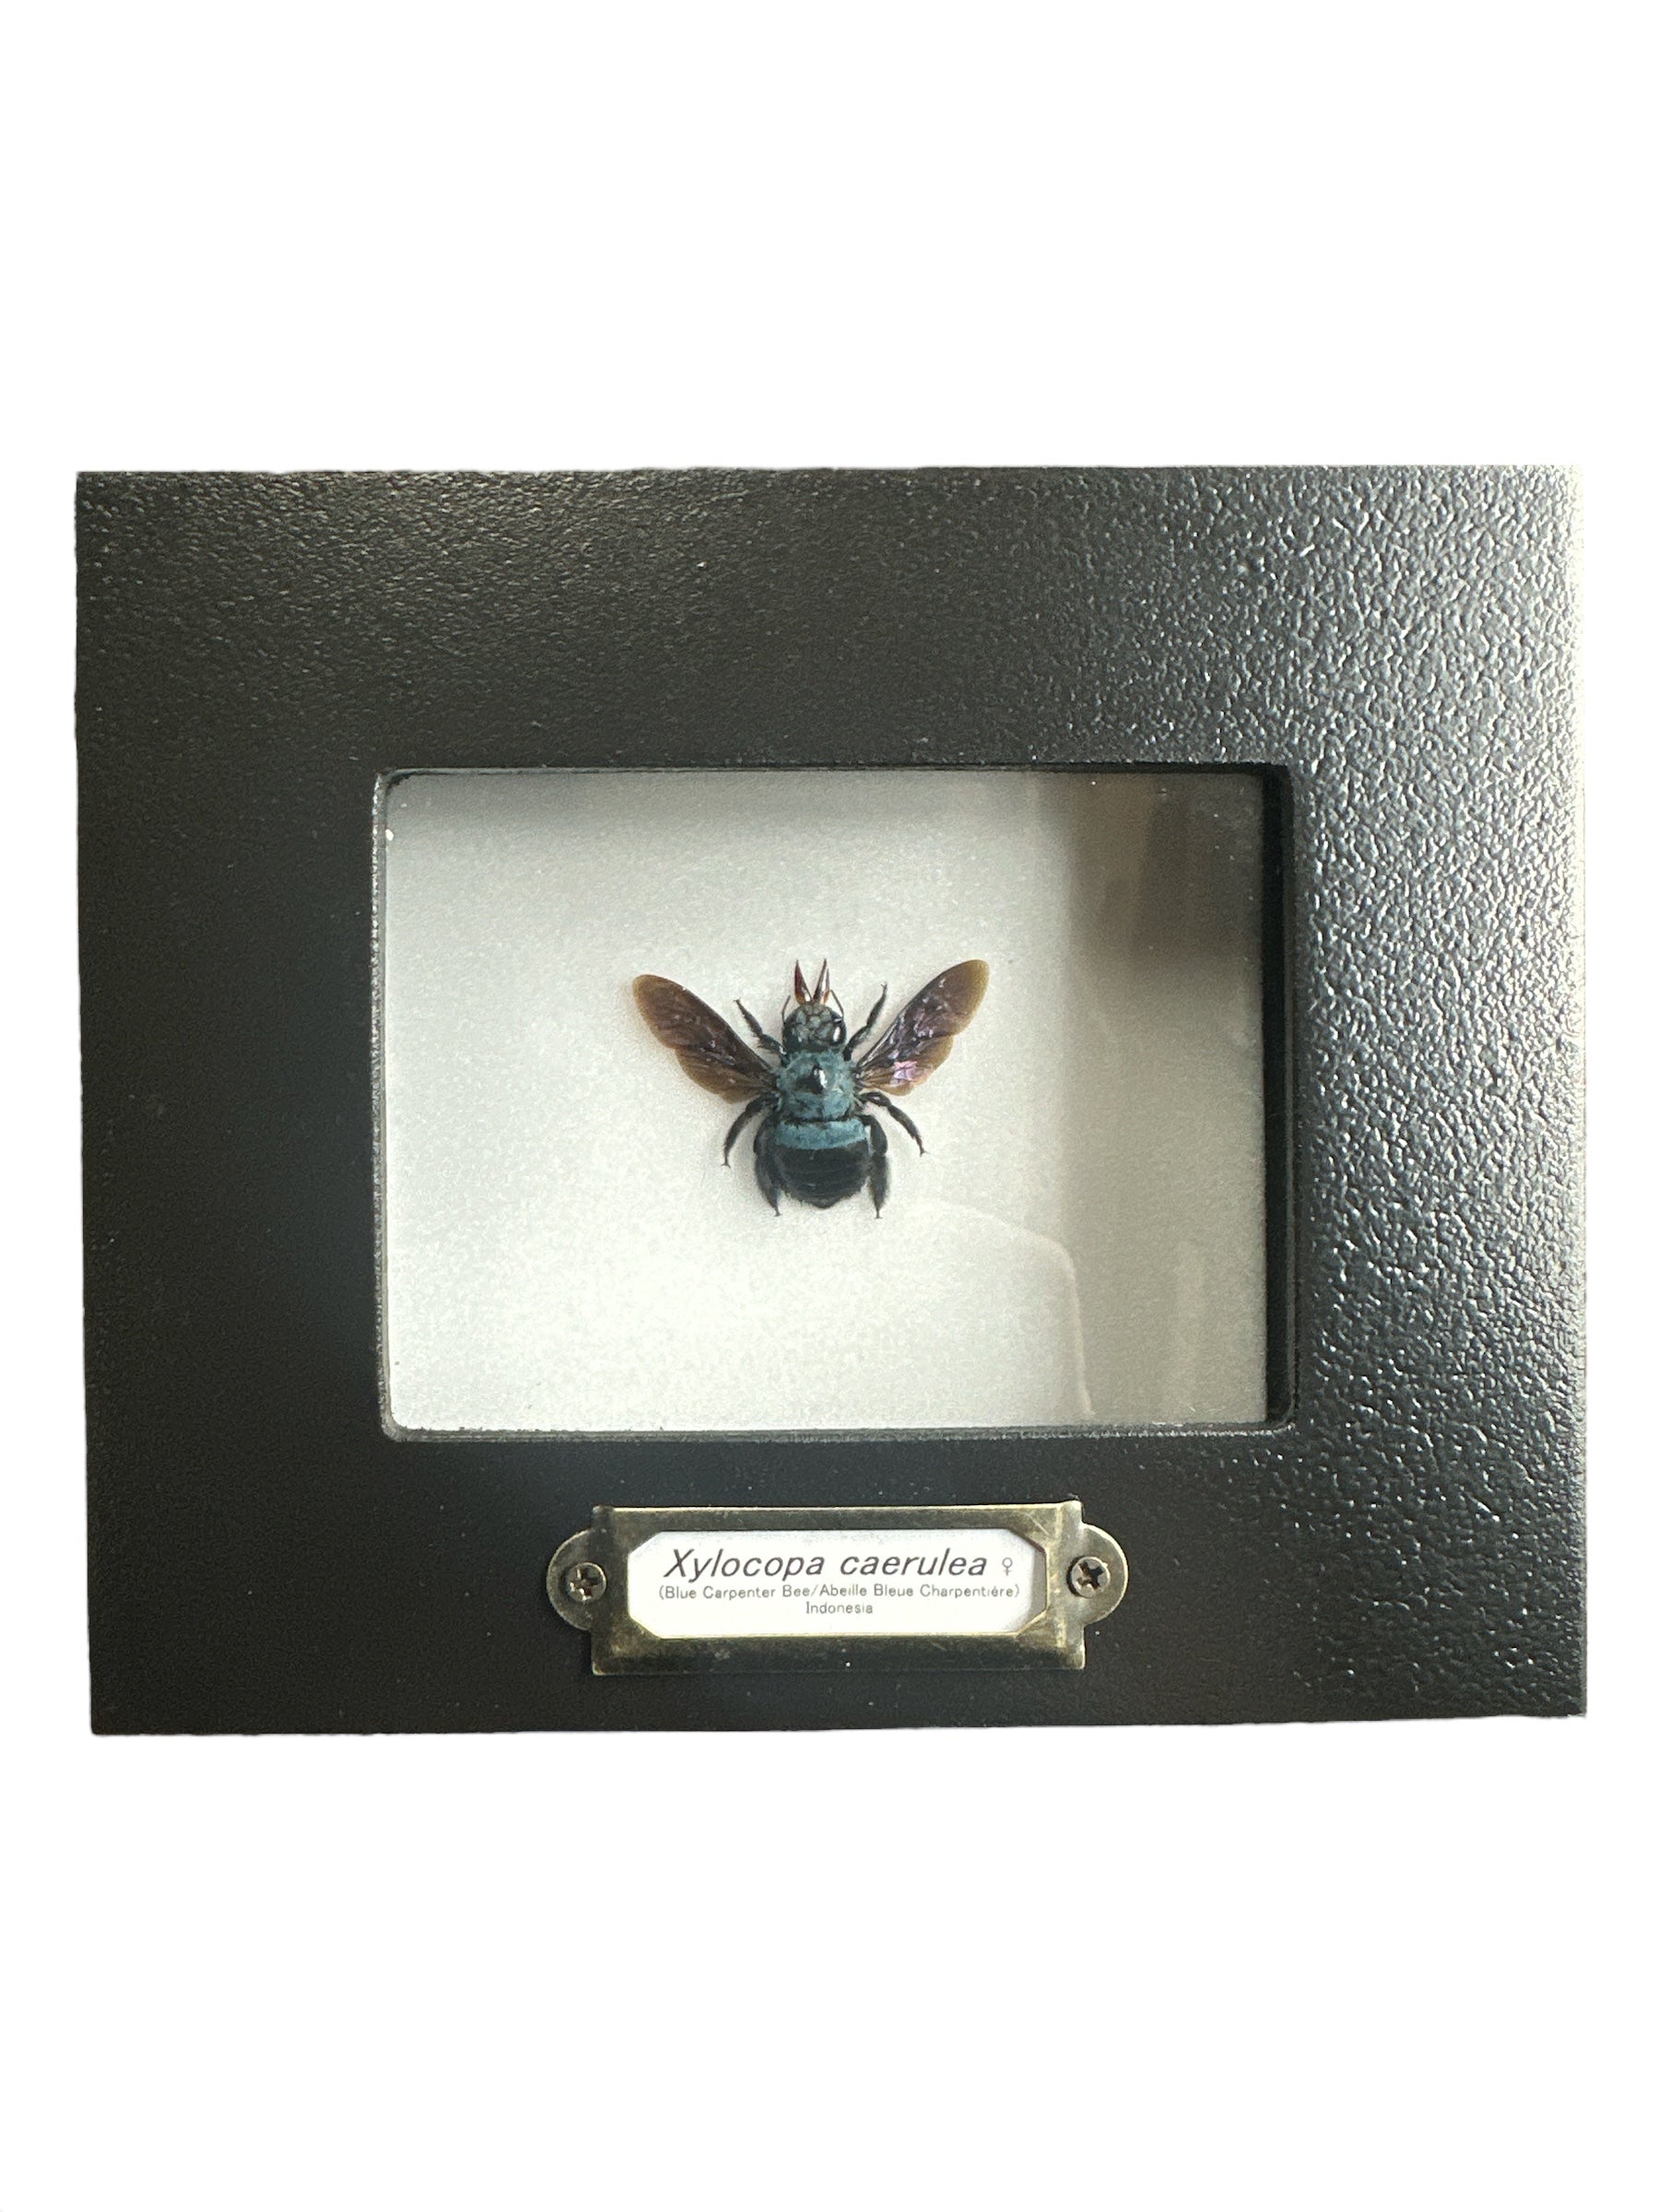 Blue Carpenter Bee - Female (Xylocopa caerulea) - 2x3" Frame